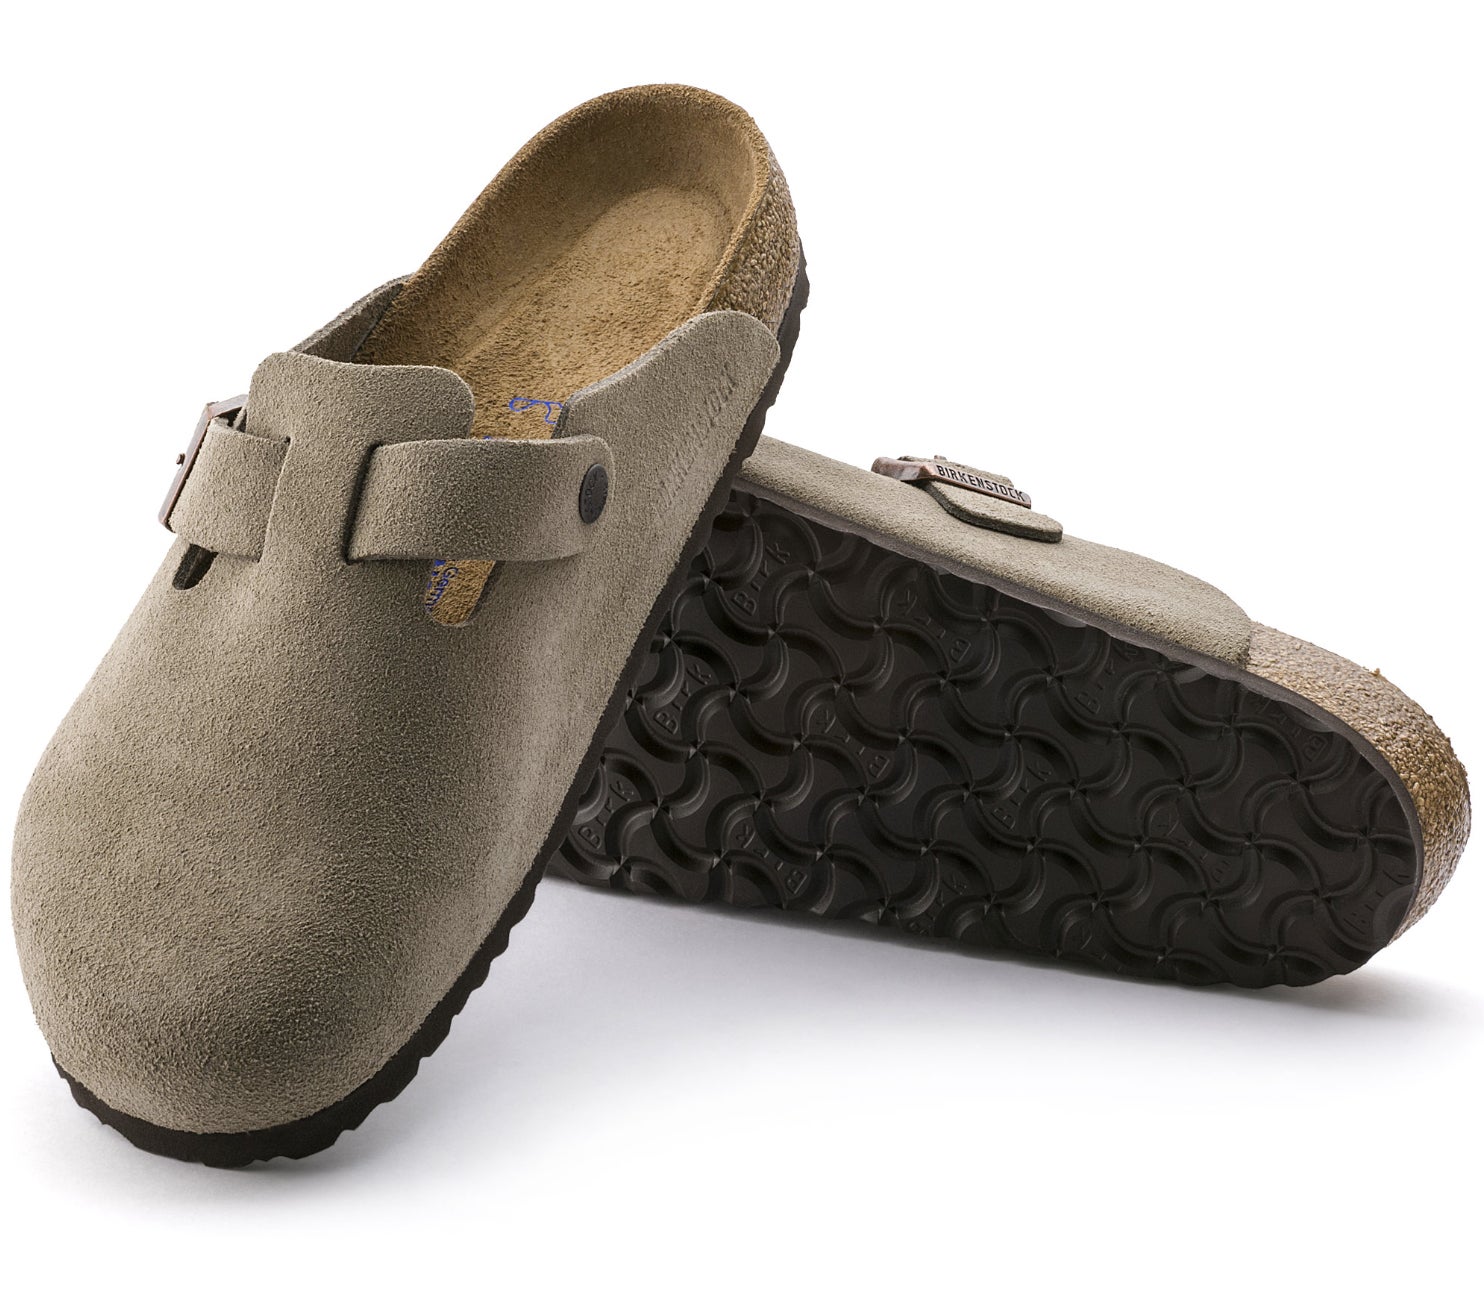 The gray Birkenstock shoes